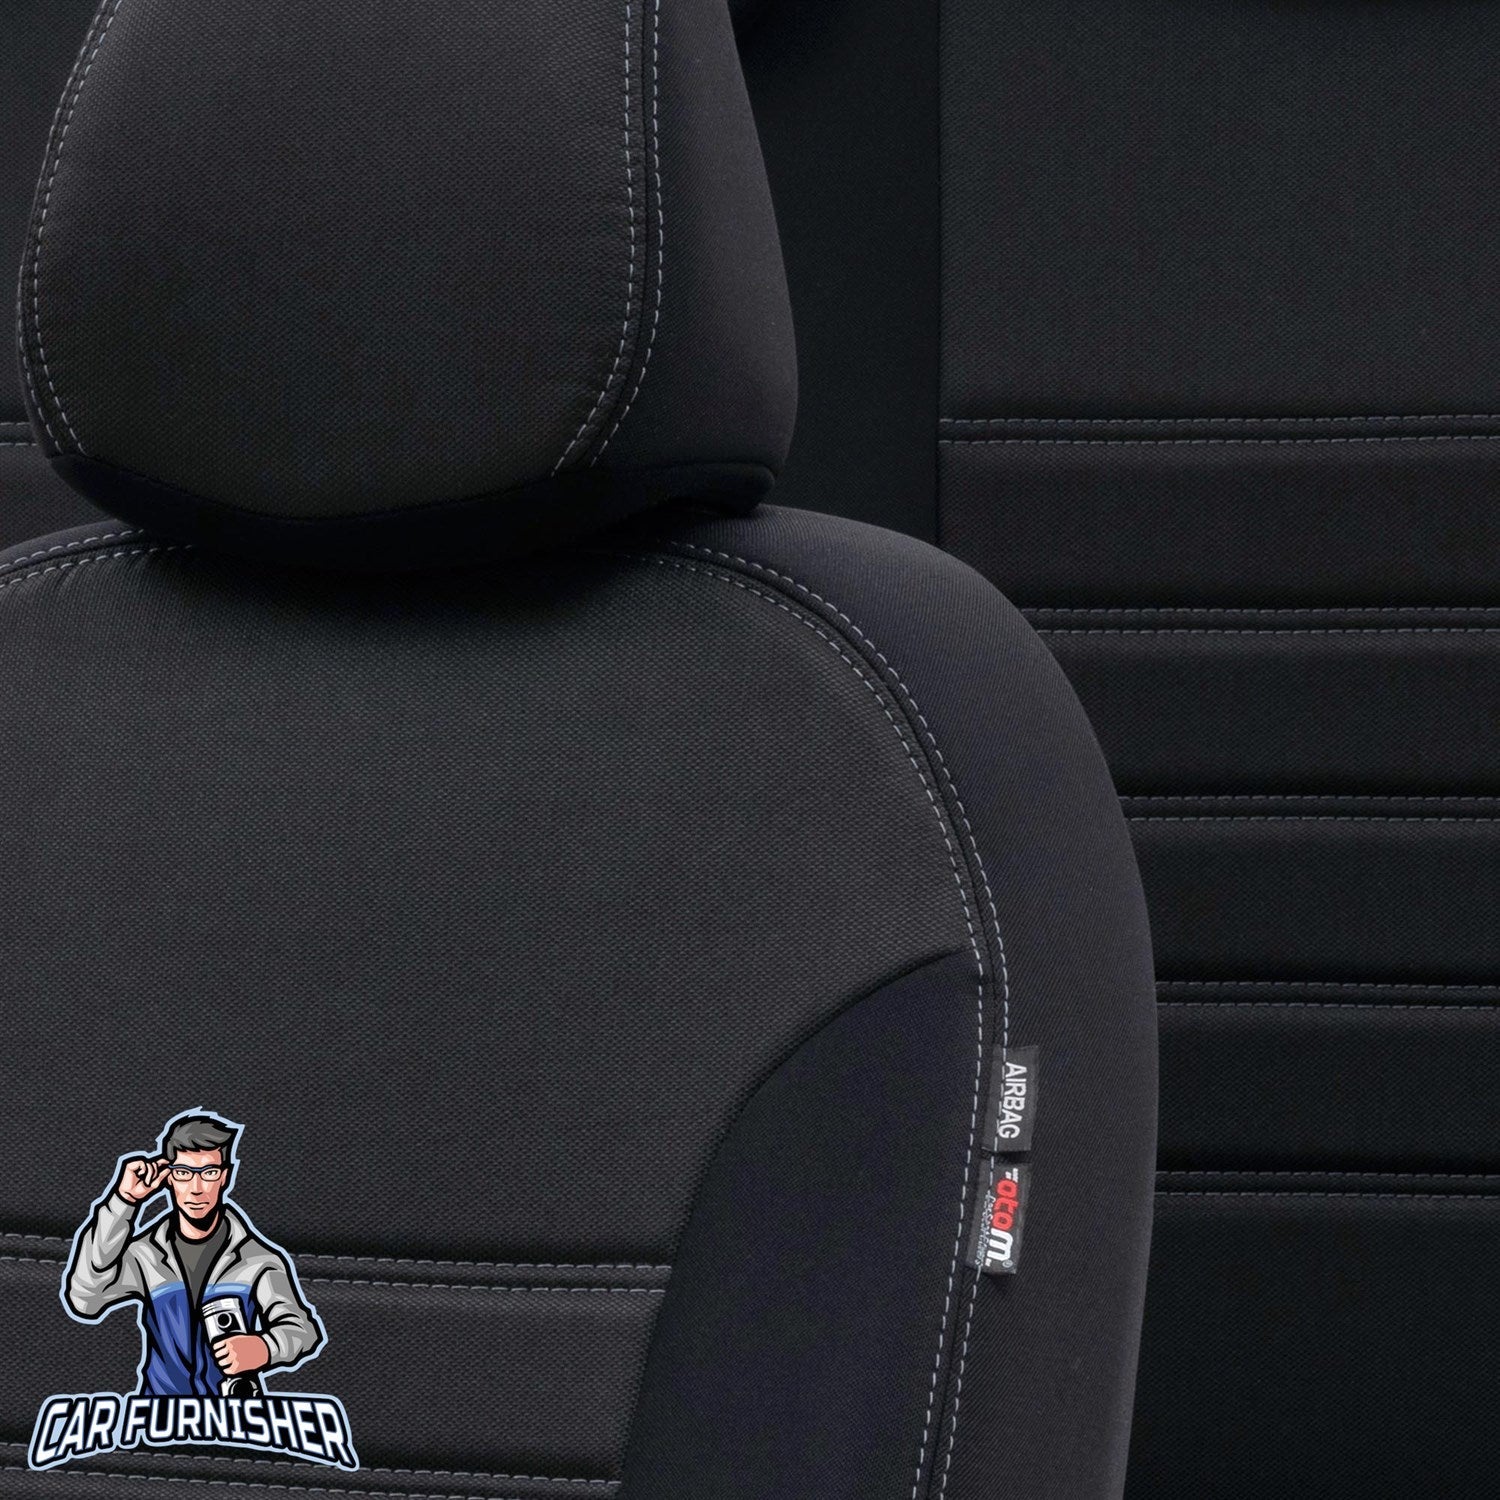 Audi A1 Seat Cover Original Jacquard Design Black Jacquard Fabric